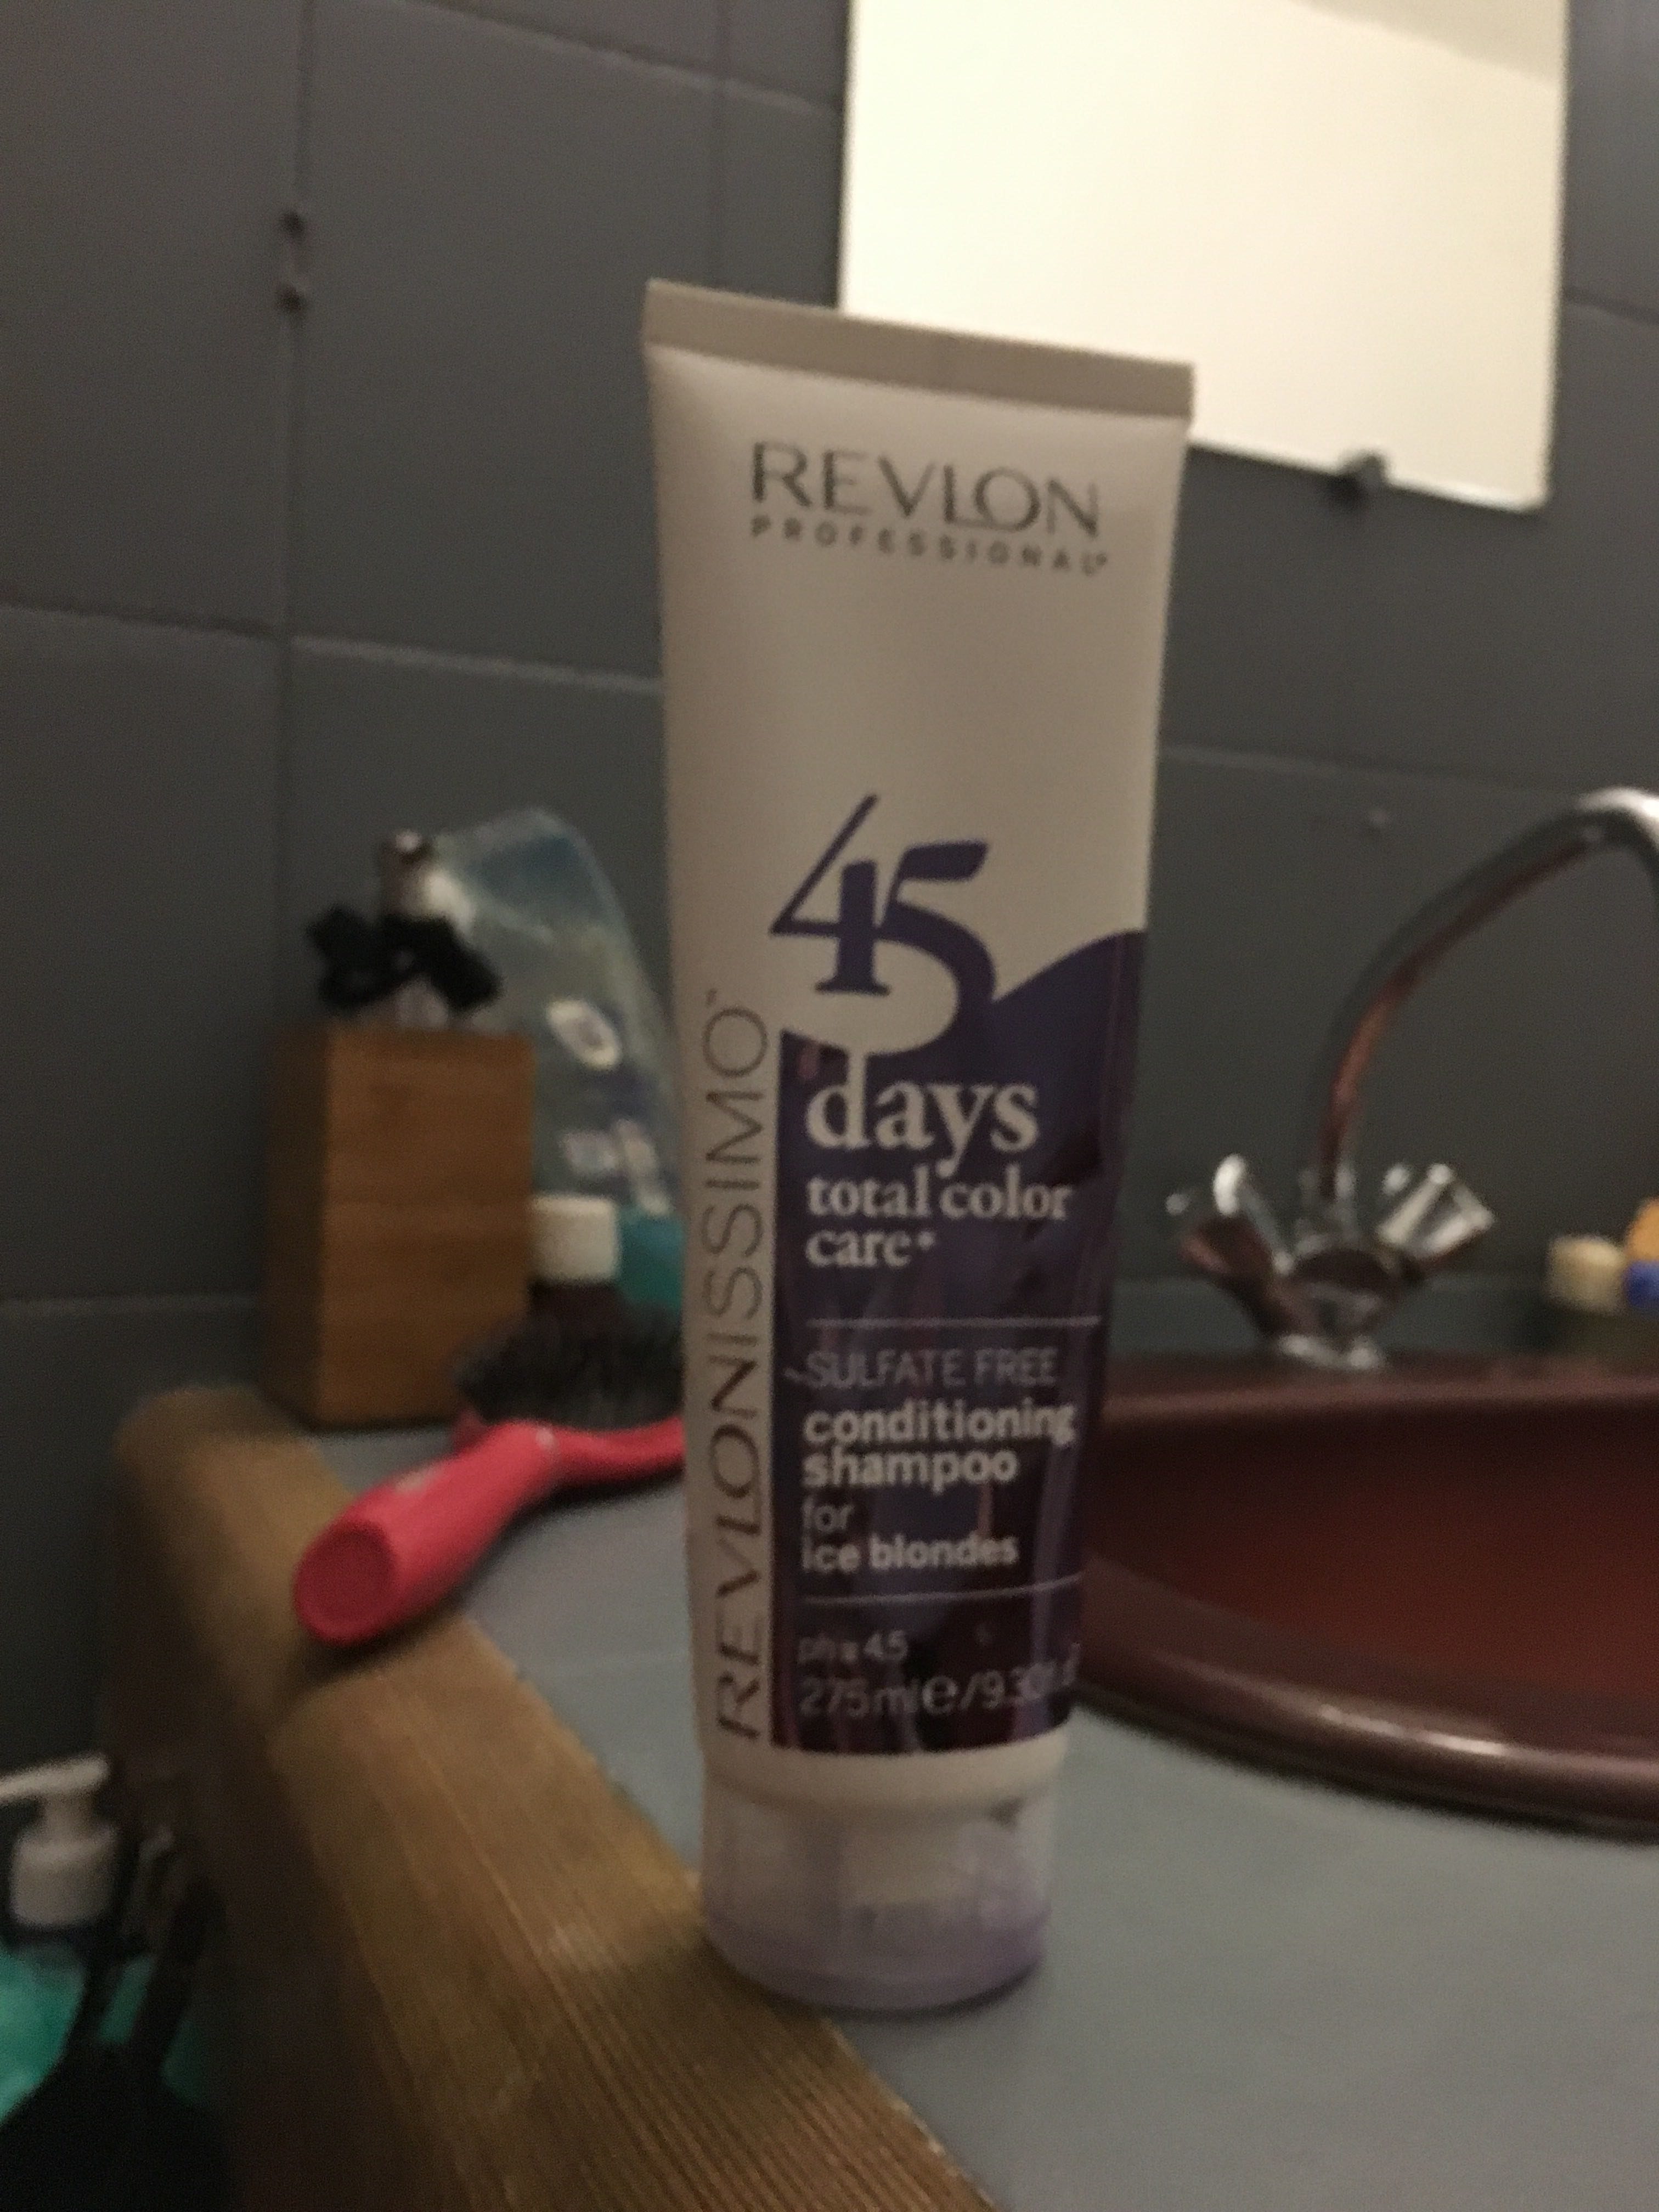 45 days total color care for ice blondes - Produktas - fr